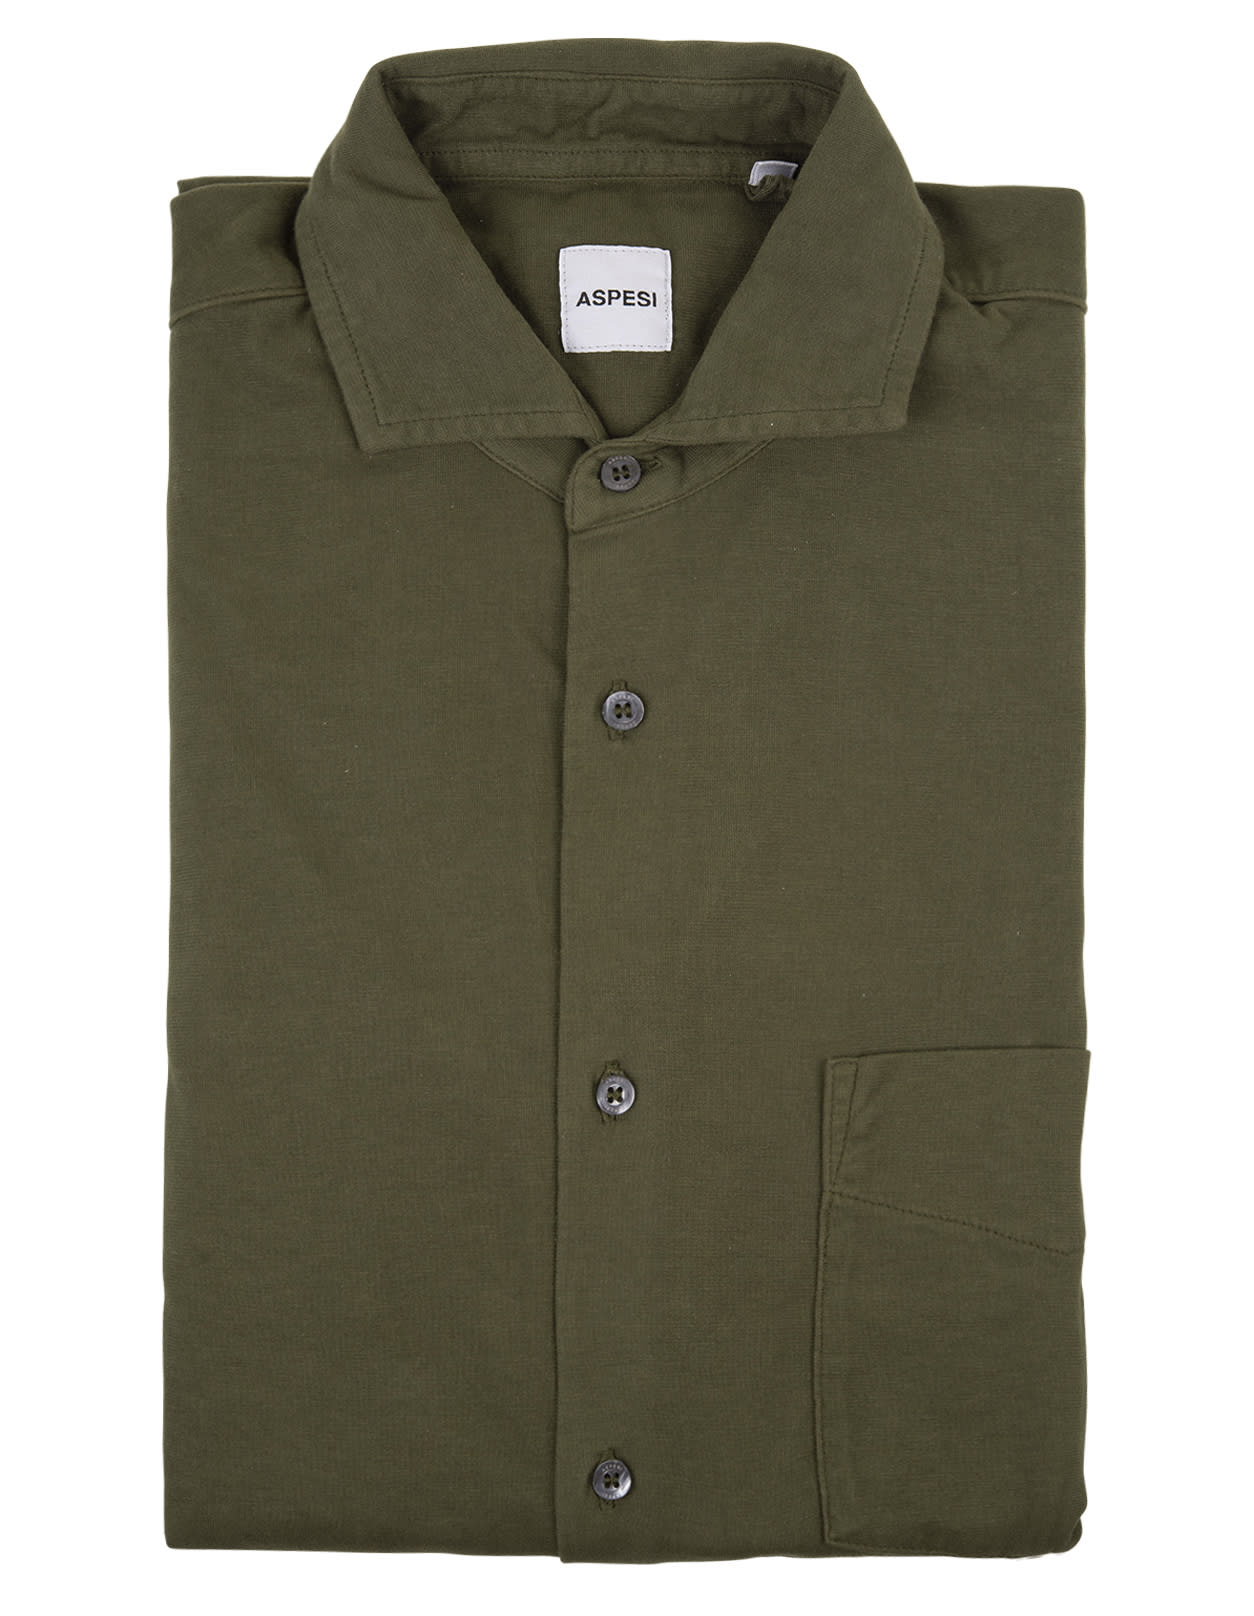 Aspesi Man Shirt In Military Green Cotton Jersey